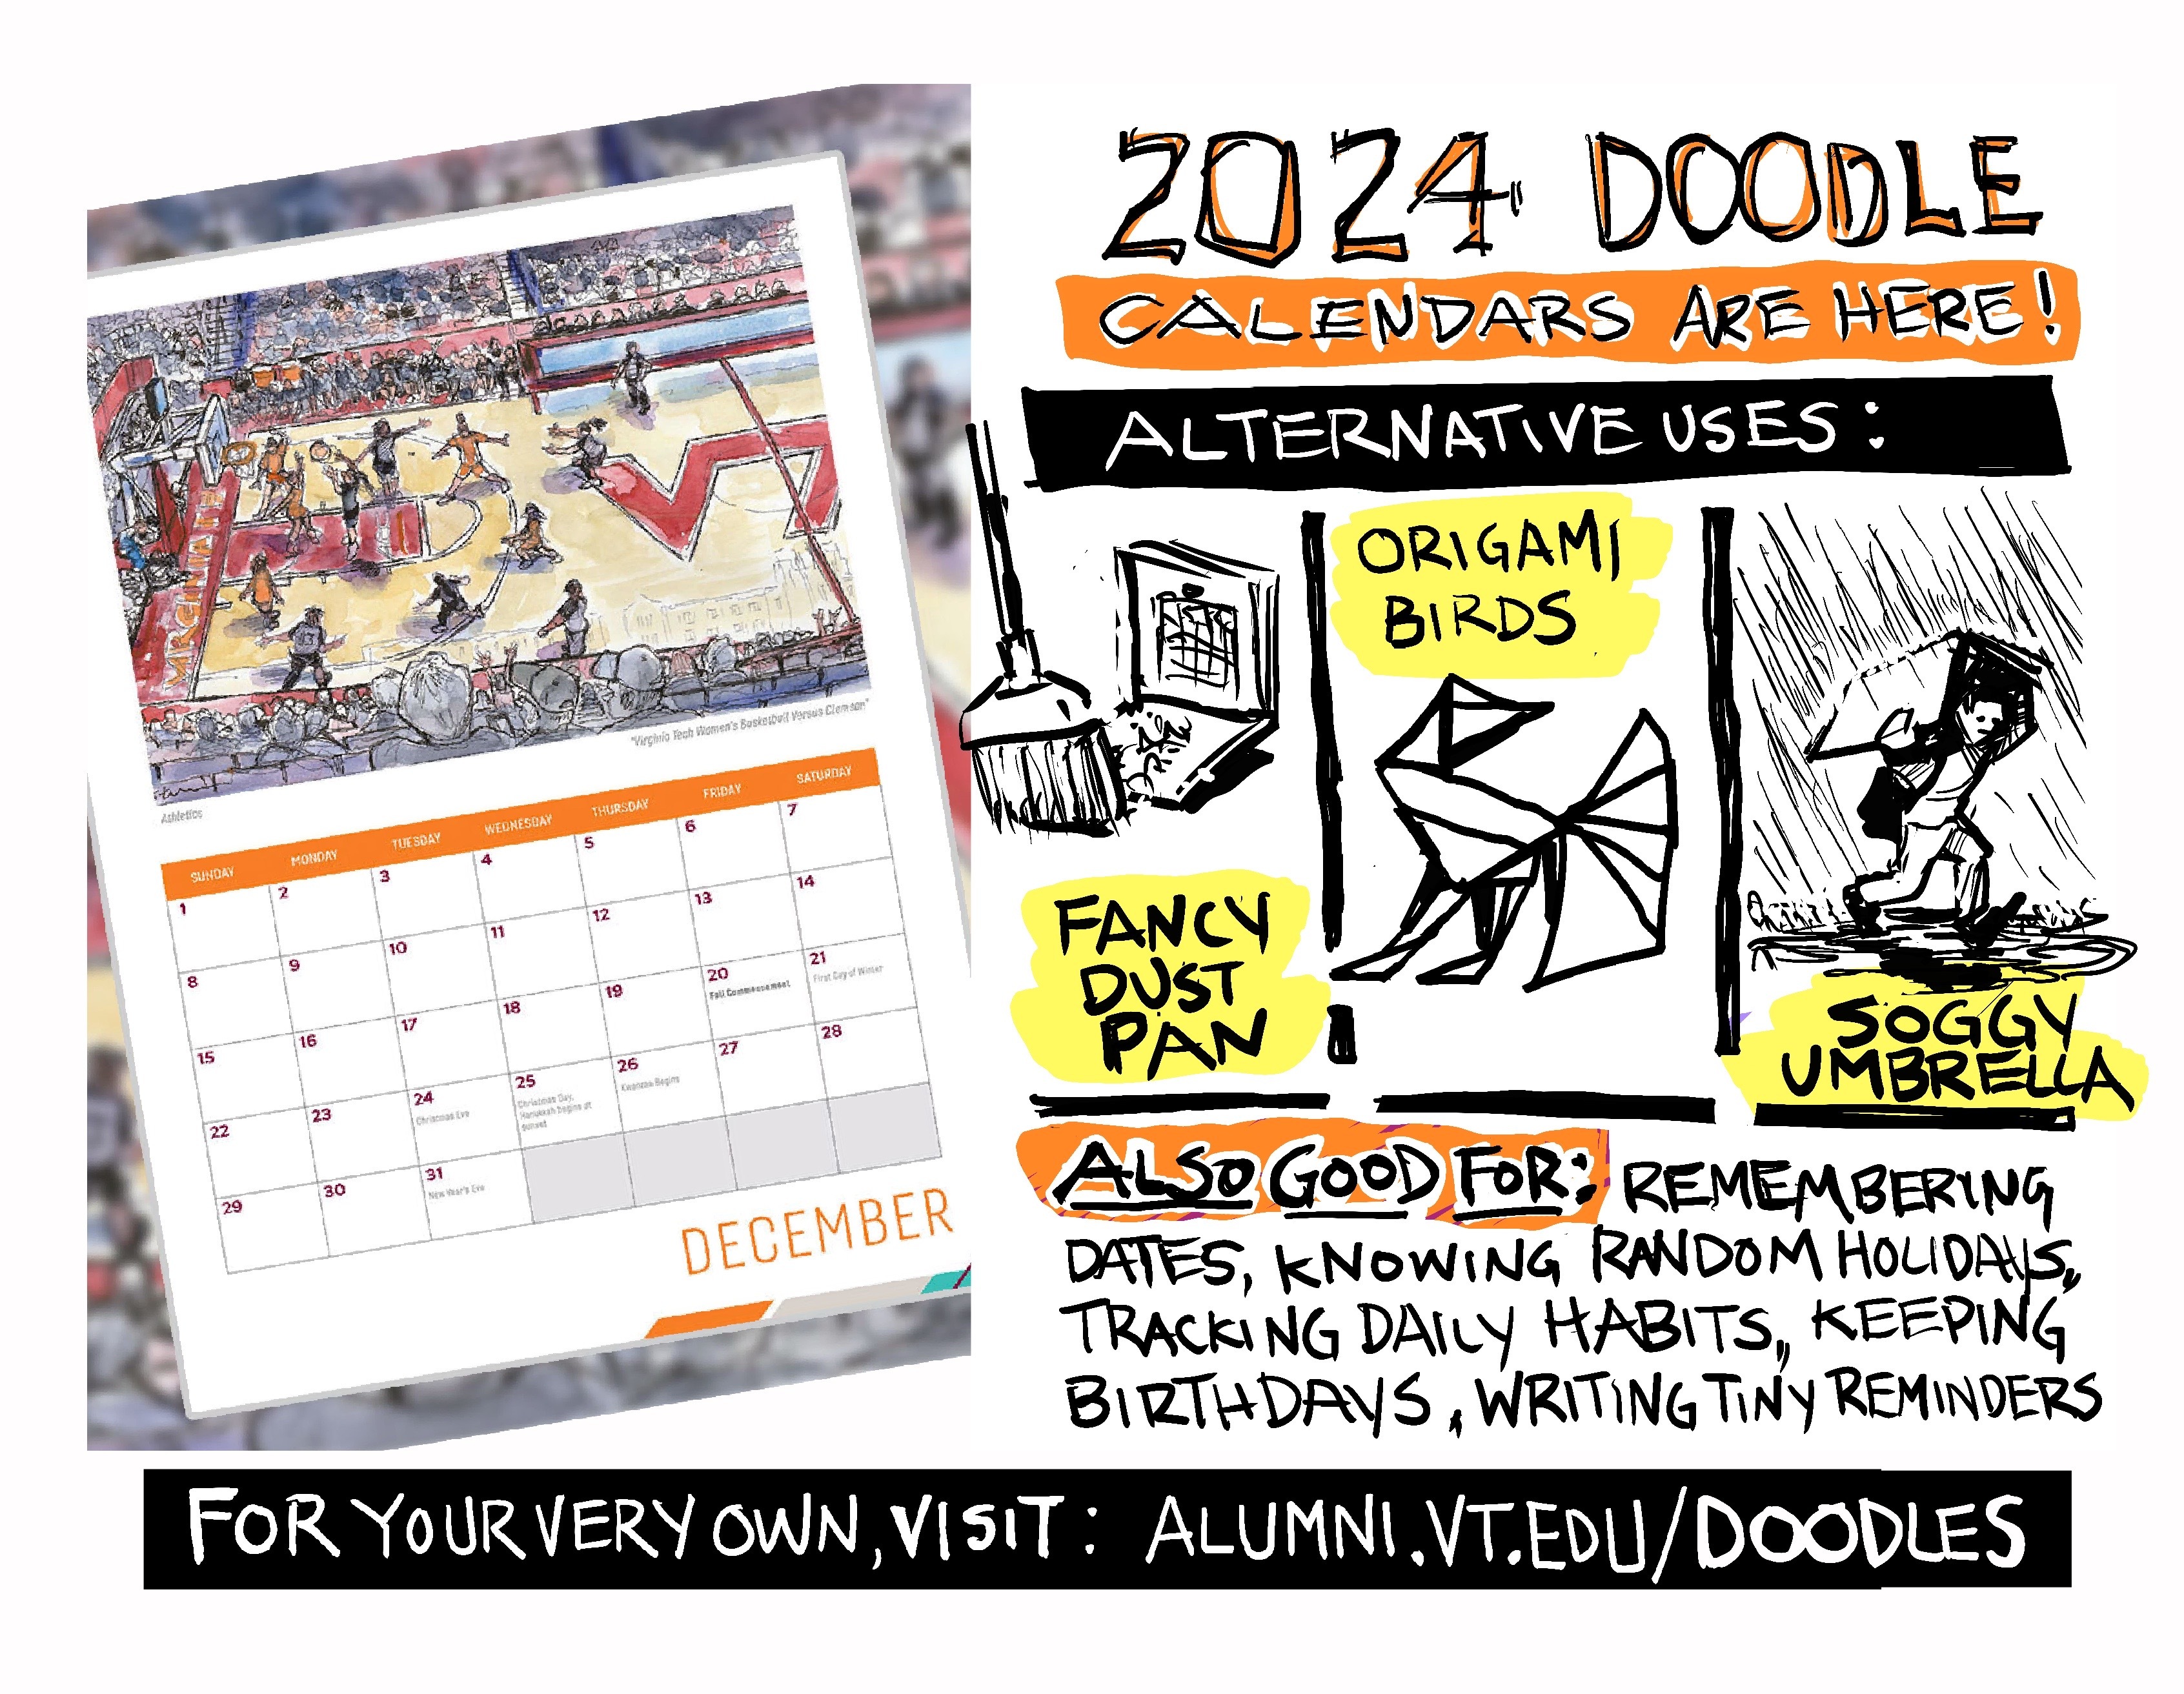 Ddigital promotion of the 2024 doodle calendars